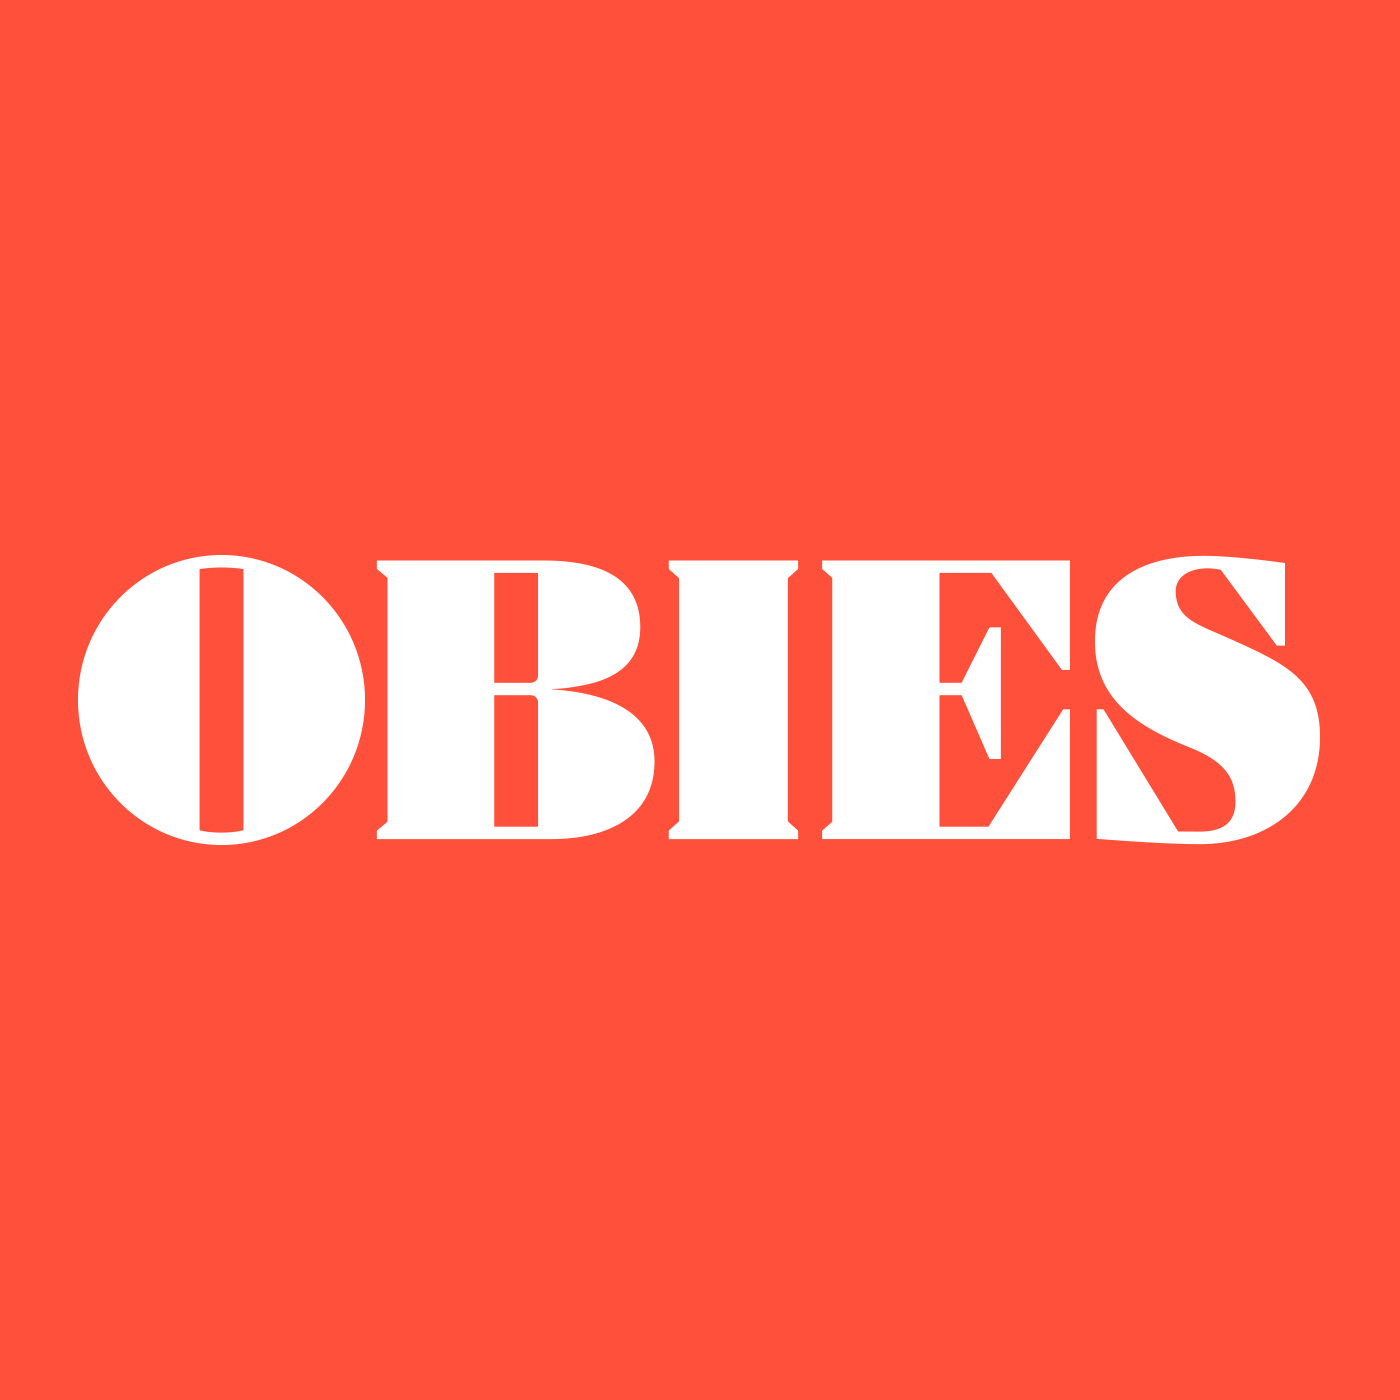 Livestream from New York Theatre's Obie Awards Socially Sparked News